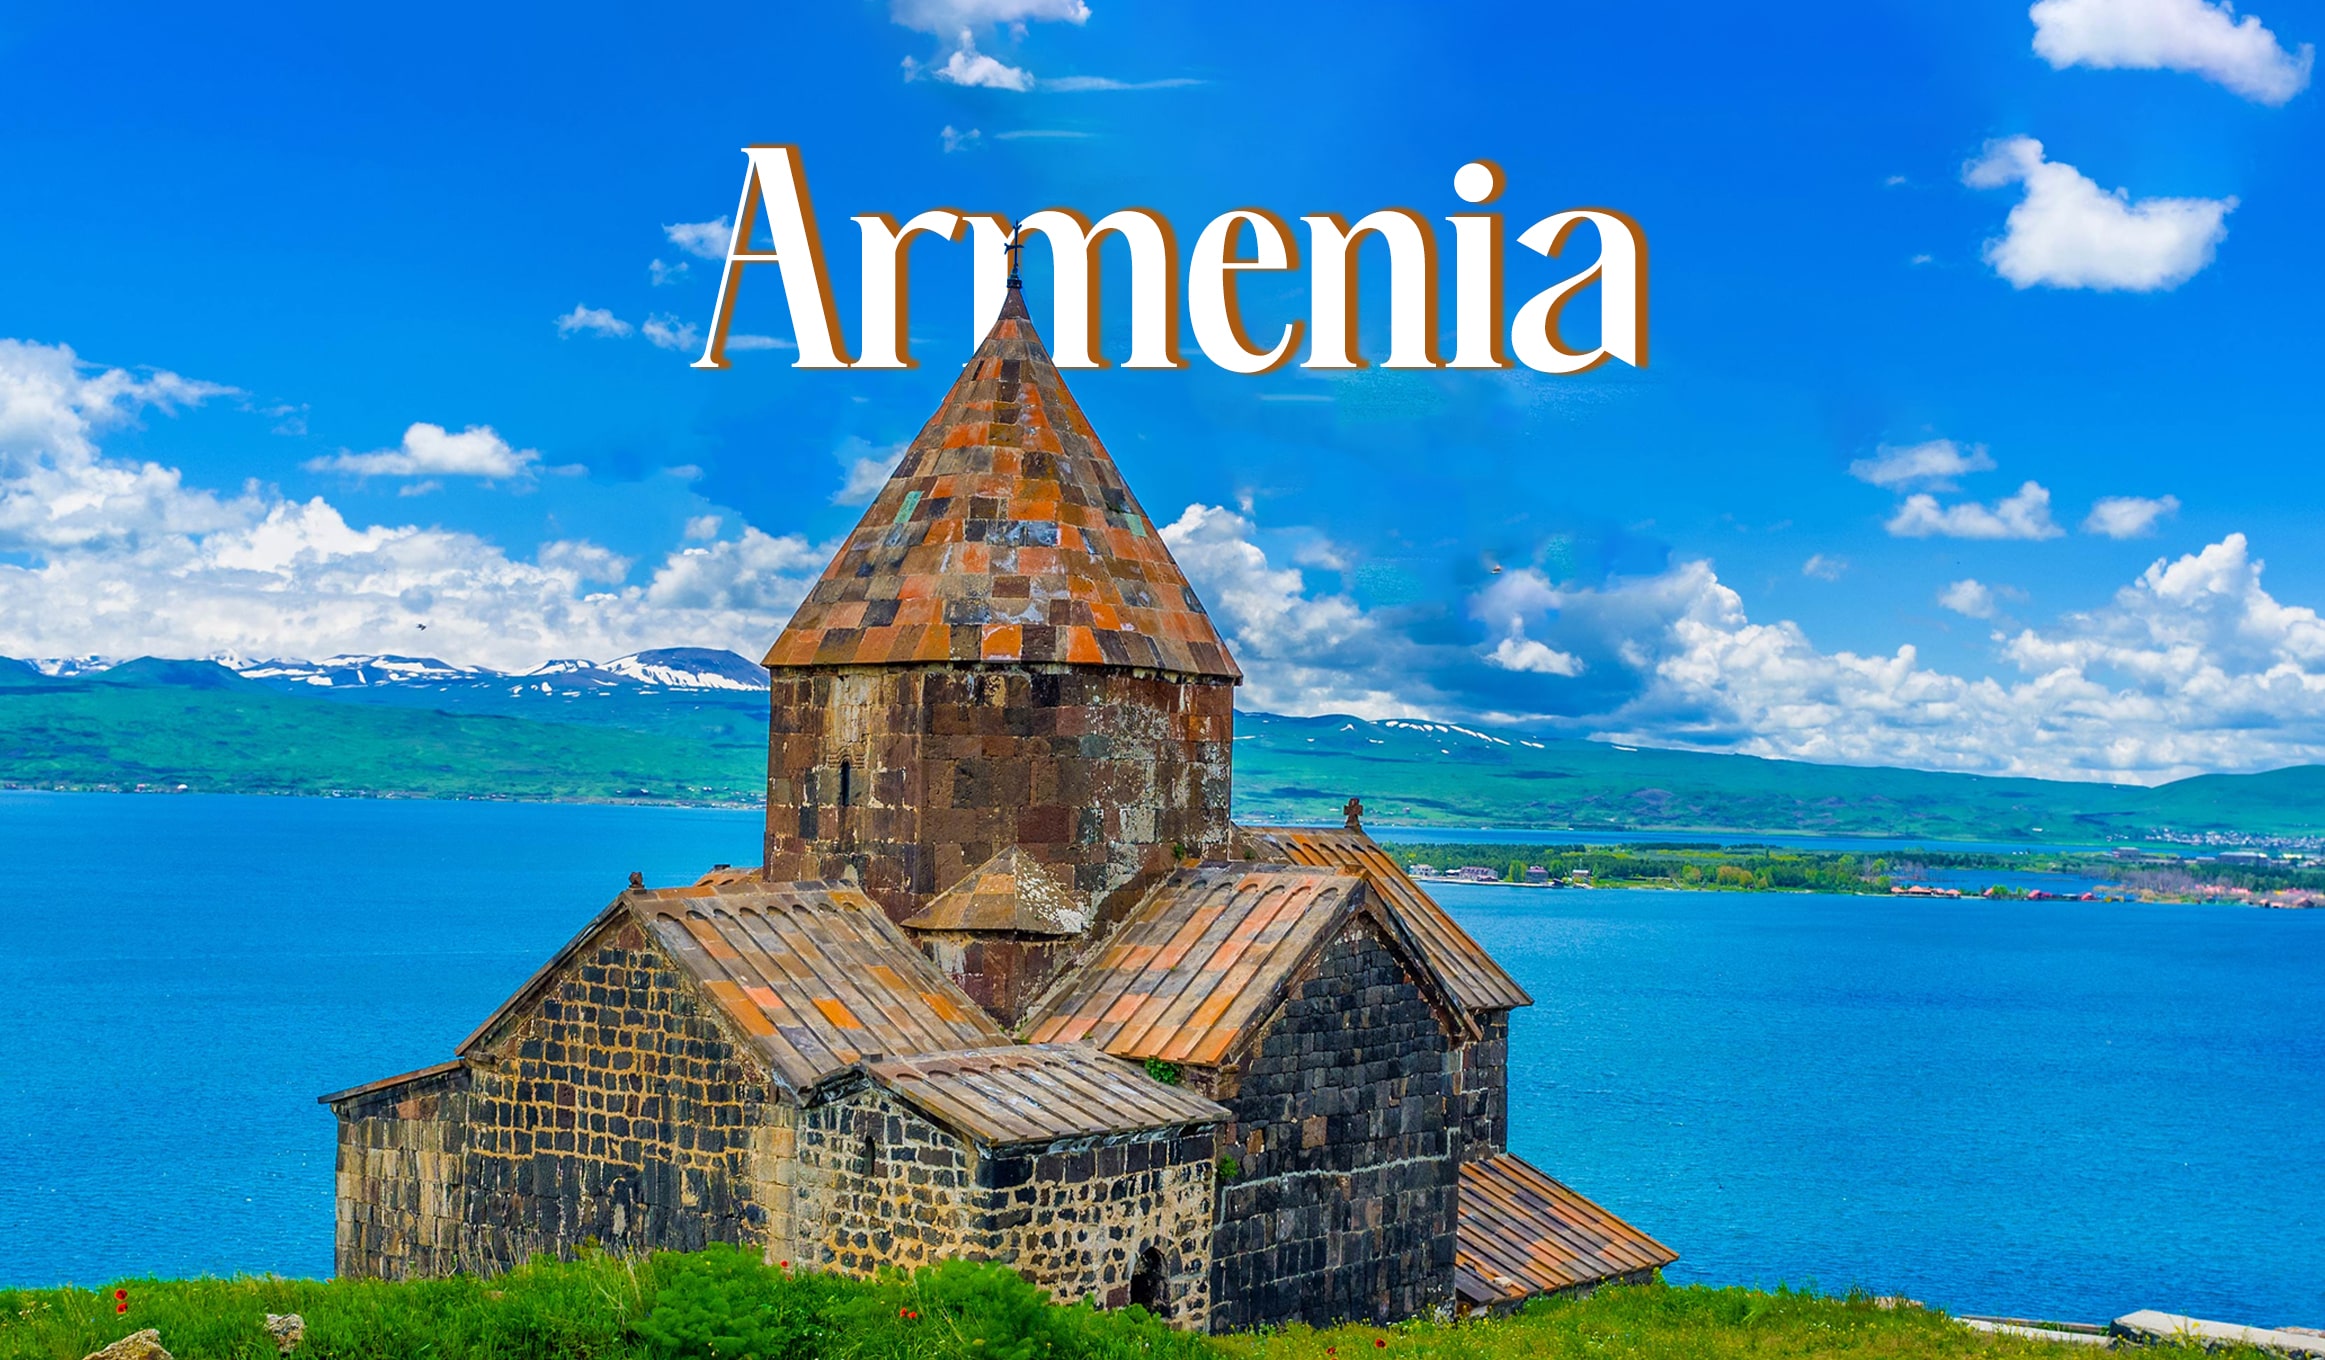 Ancient – Armenia